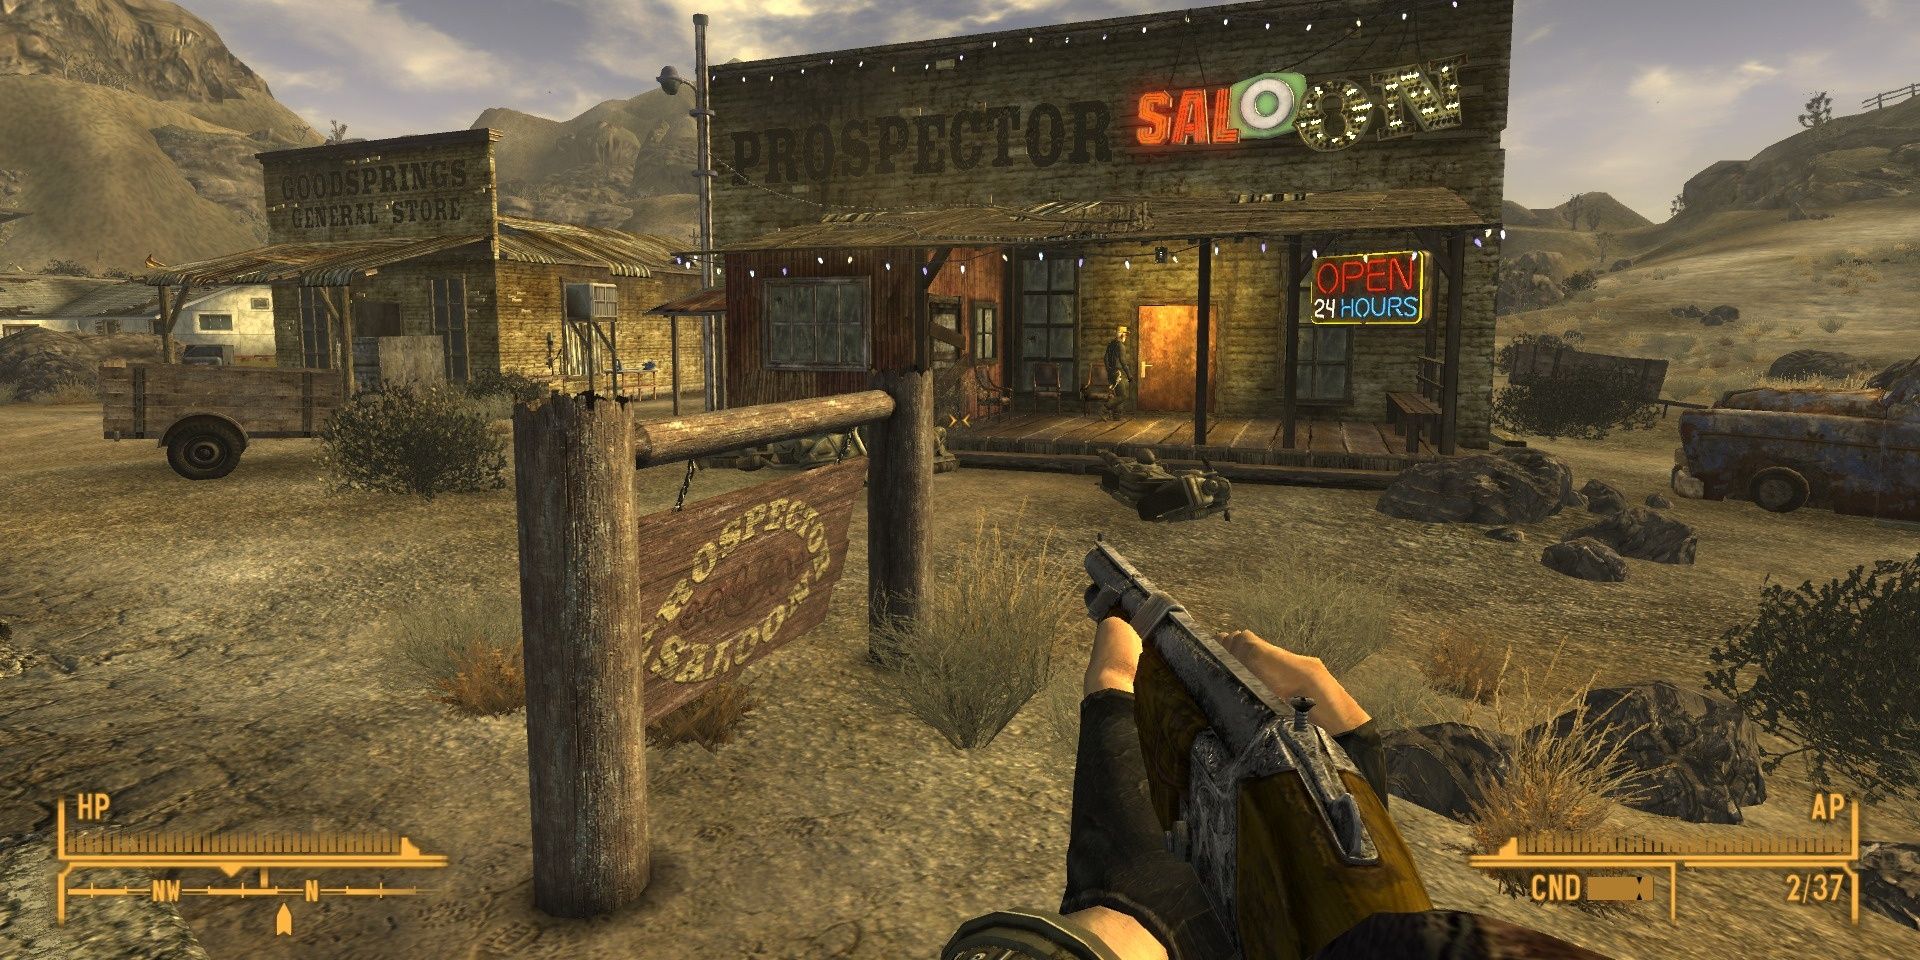 A screenshot showing gameplay in Fallout: New Vegas